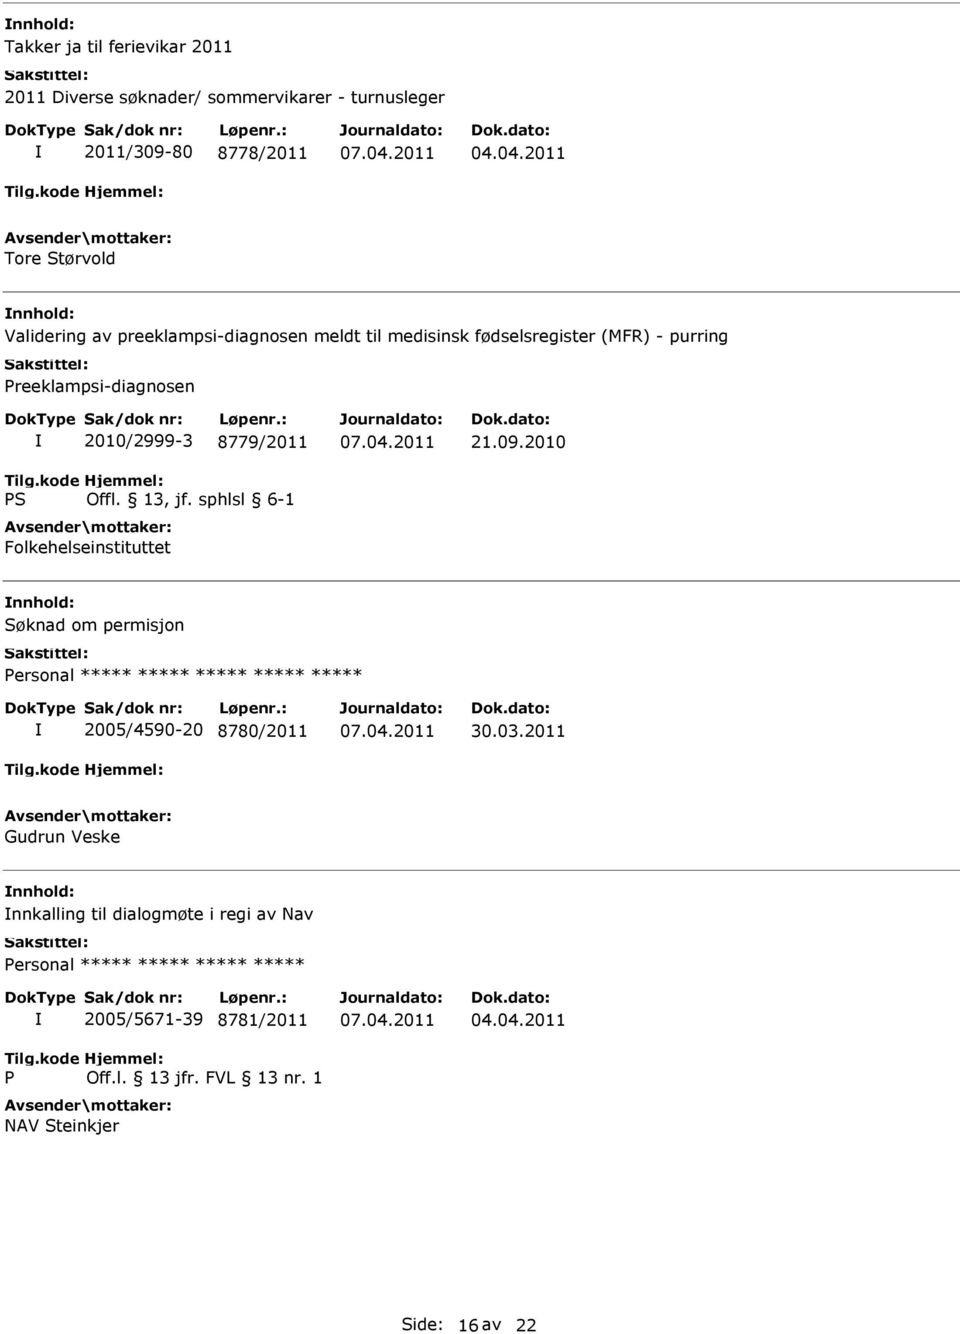 Preeklampsi-diagnosen 2010/2999-3 8779/2011 Folkehelseinstituttet 21.09.